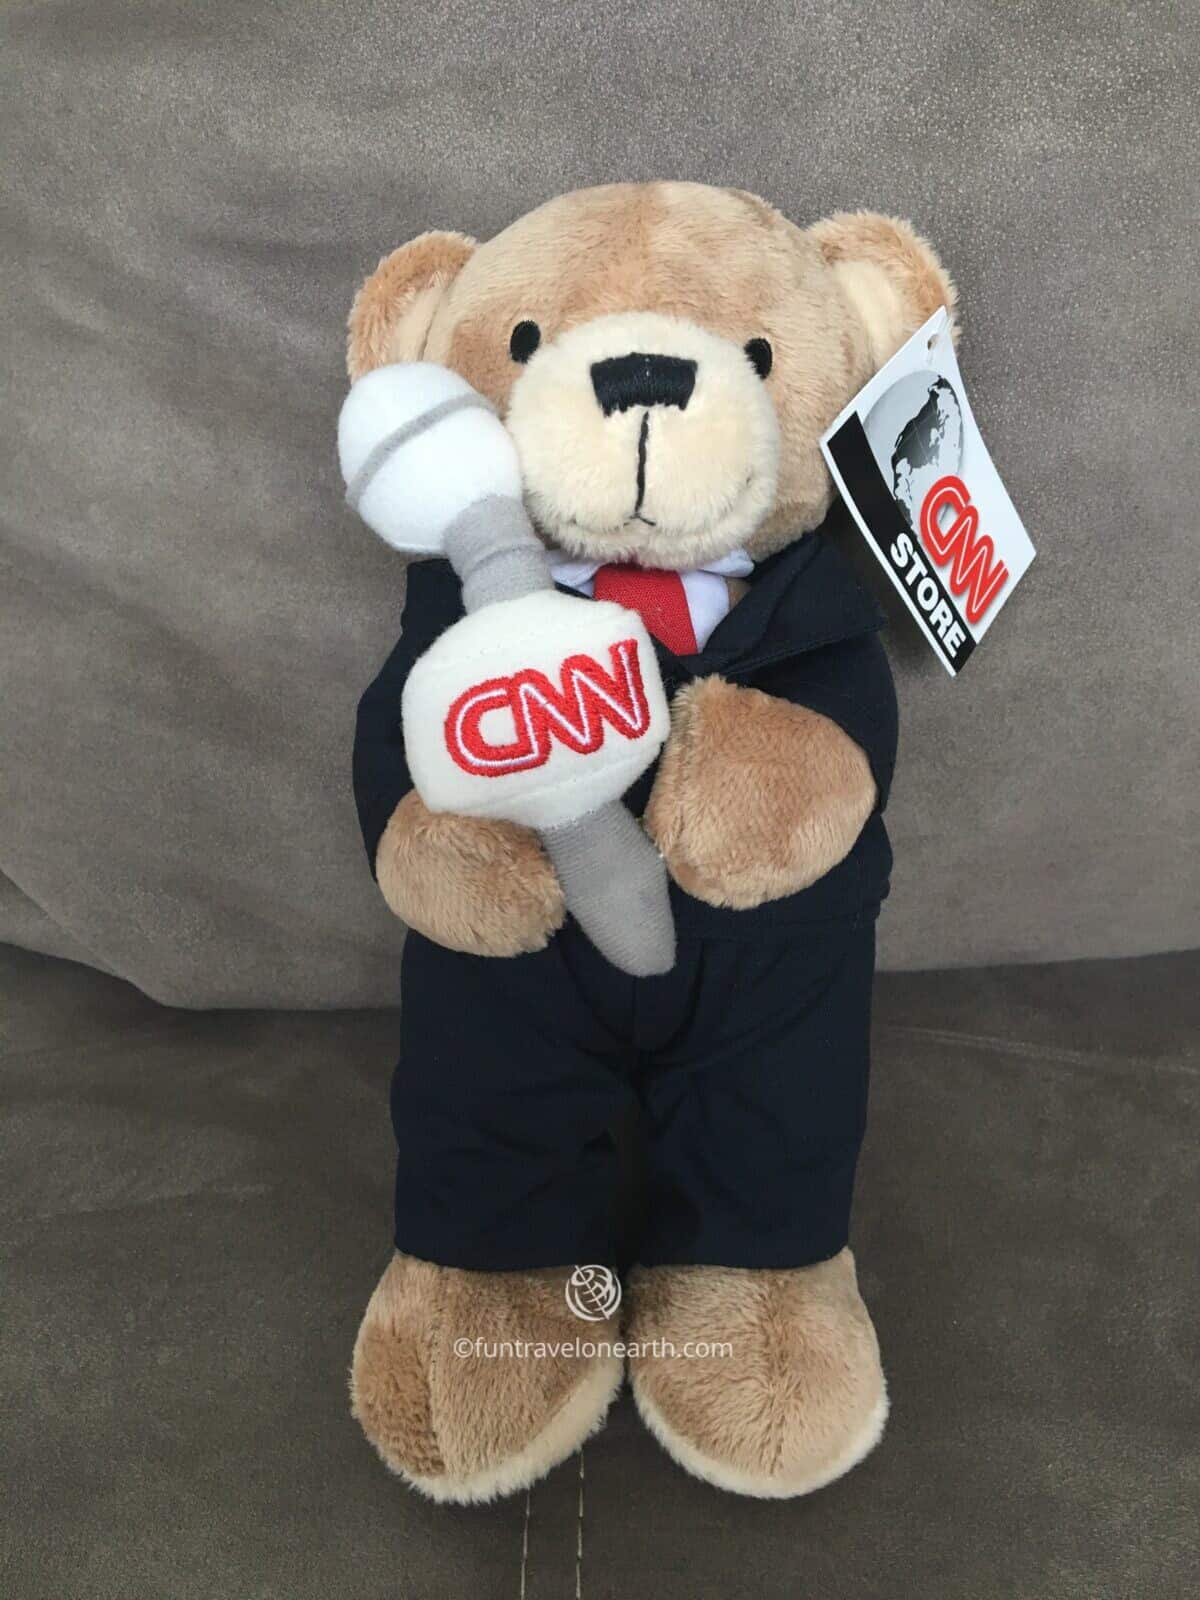 CNN STORE, Atlanta, Georgia, U.S.